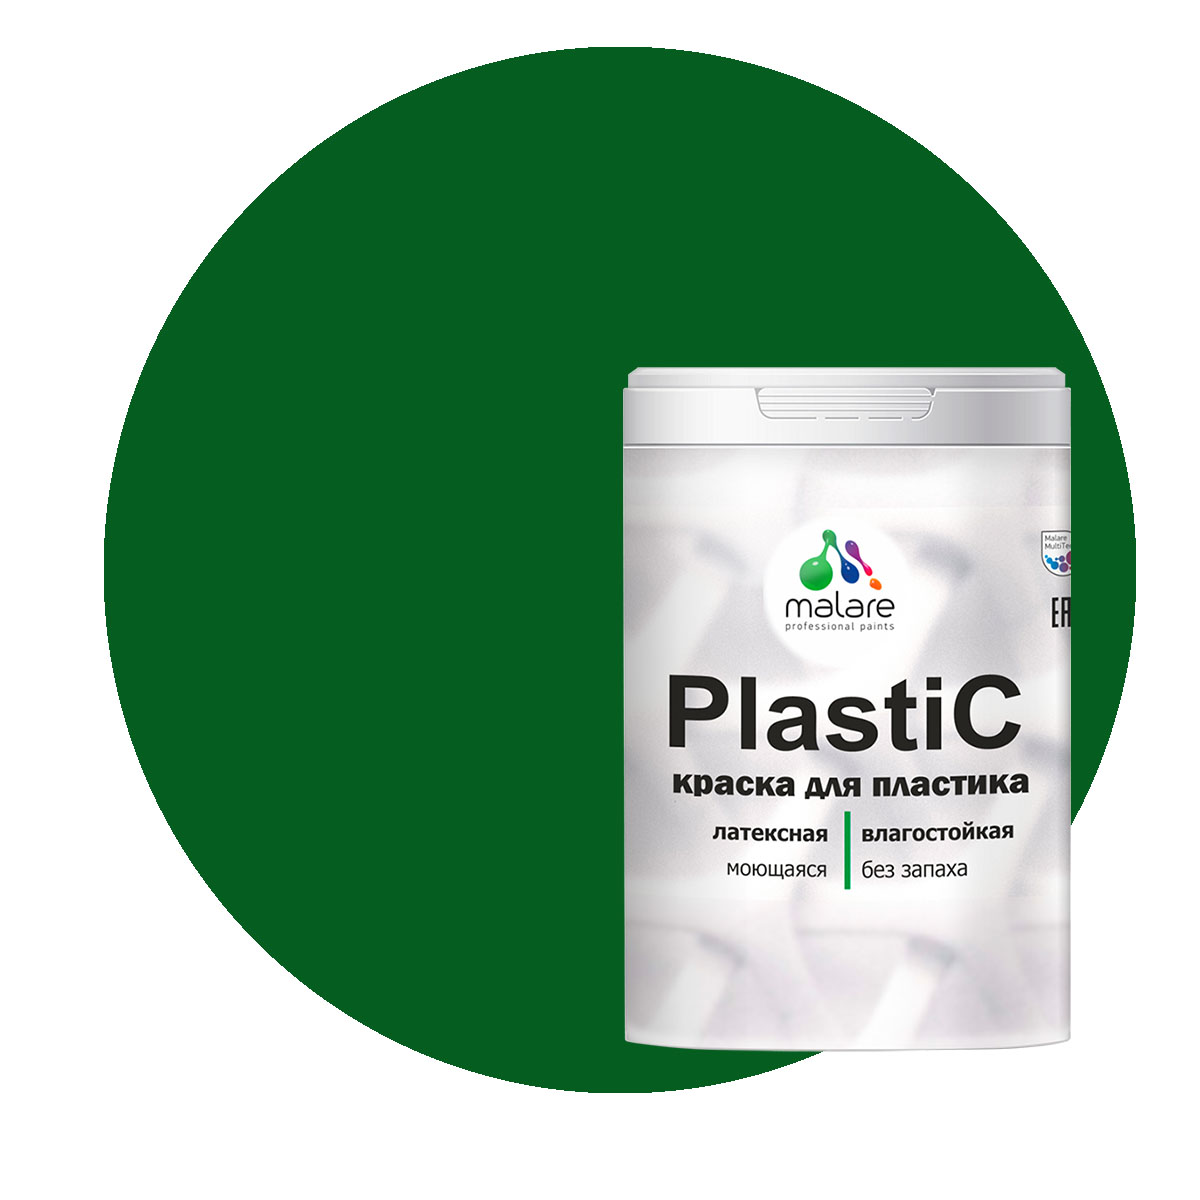 Краска Malare PlastiC для пластика, ПВХ, для сайдинга, зеленый мичиган, 1 кг. краска malare plastic для пластика пвх для сайдинга зеленый мичиган 2 кг